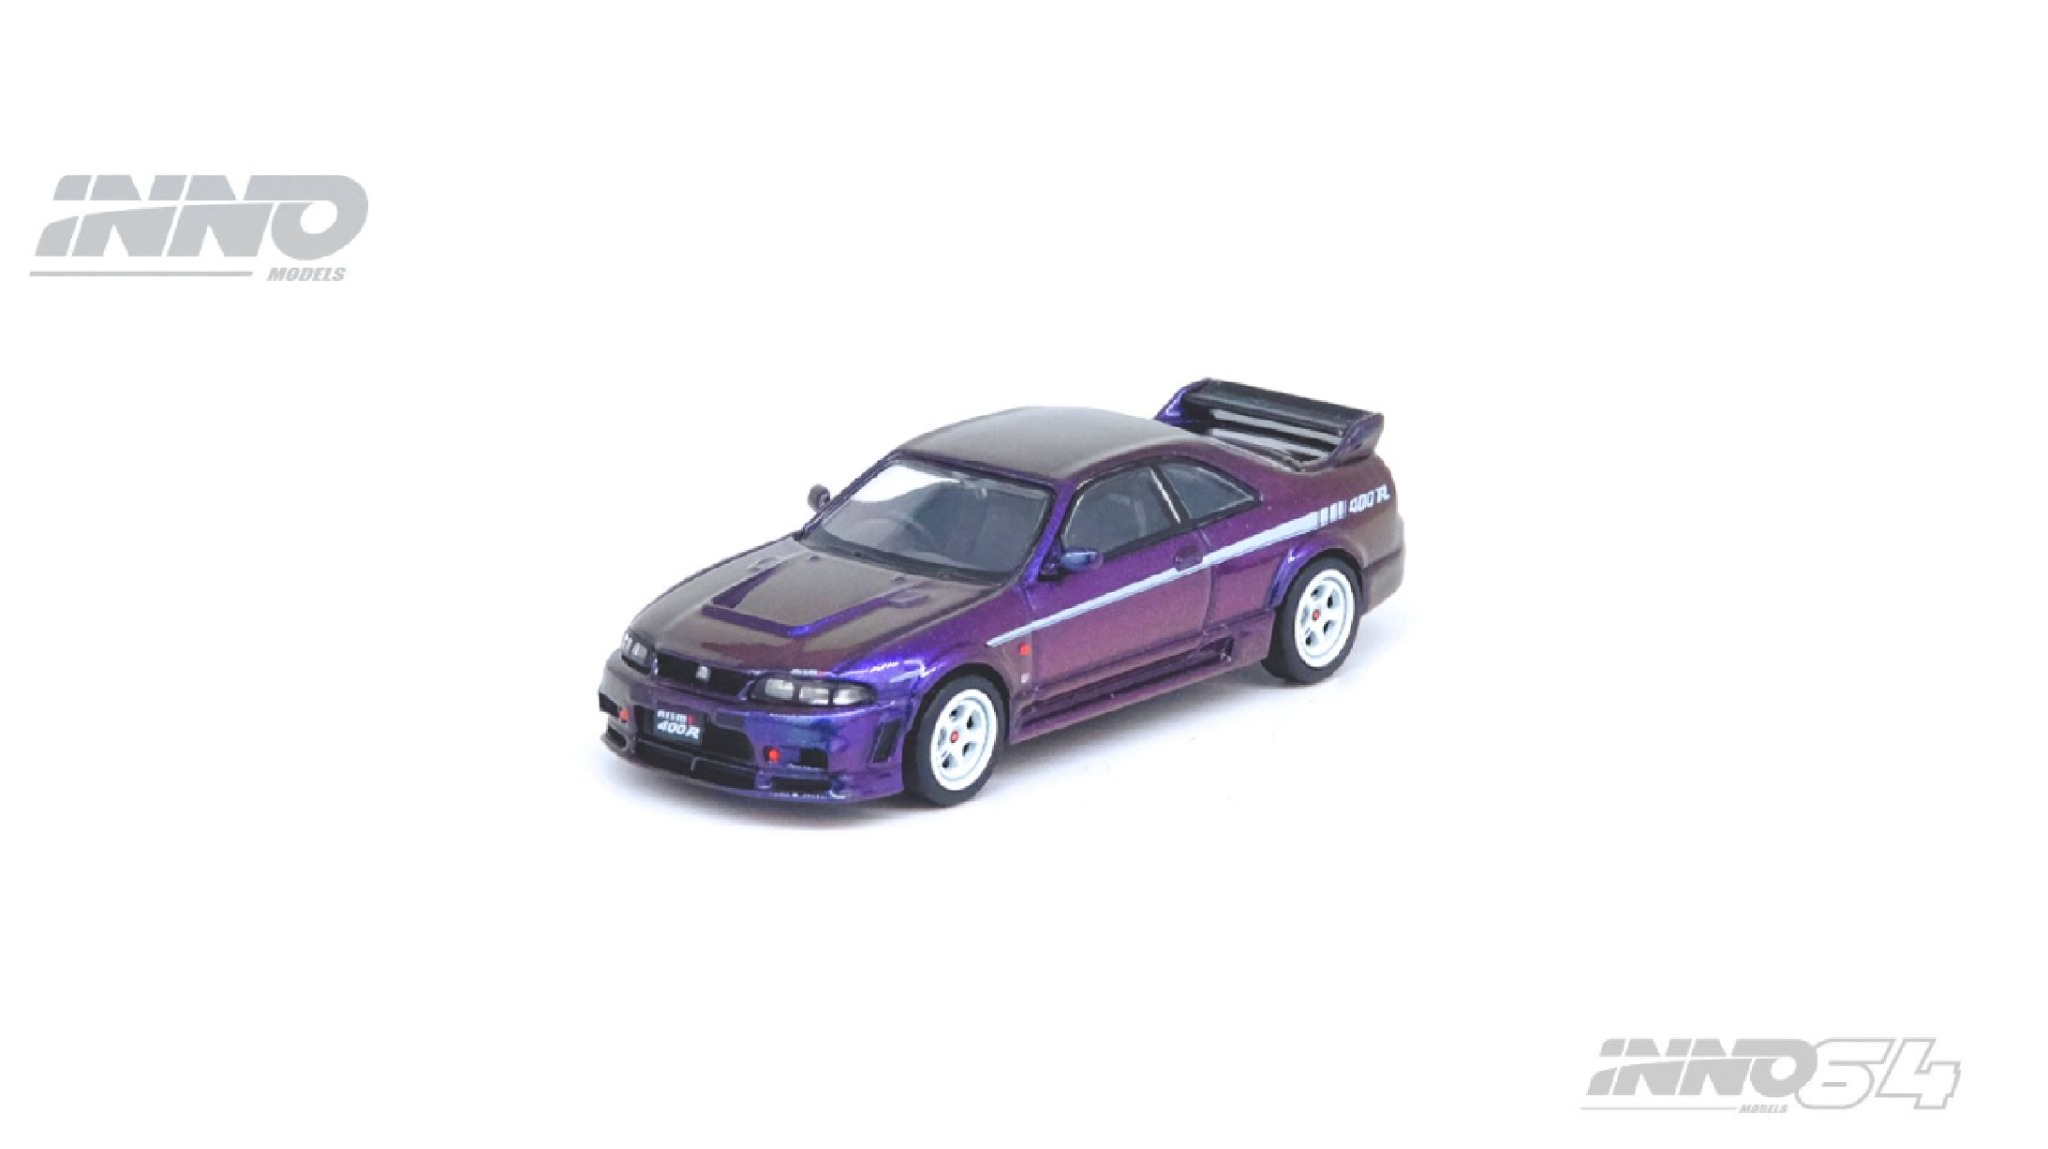  Mô hình xe ô tô Nissan Skyline GT-R (R33) Nismo 400R Midnight Purple HK Toycar Salon 2023 tỉ lệ 1:64 Inno64 model 